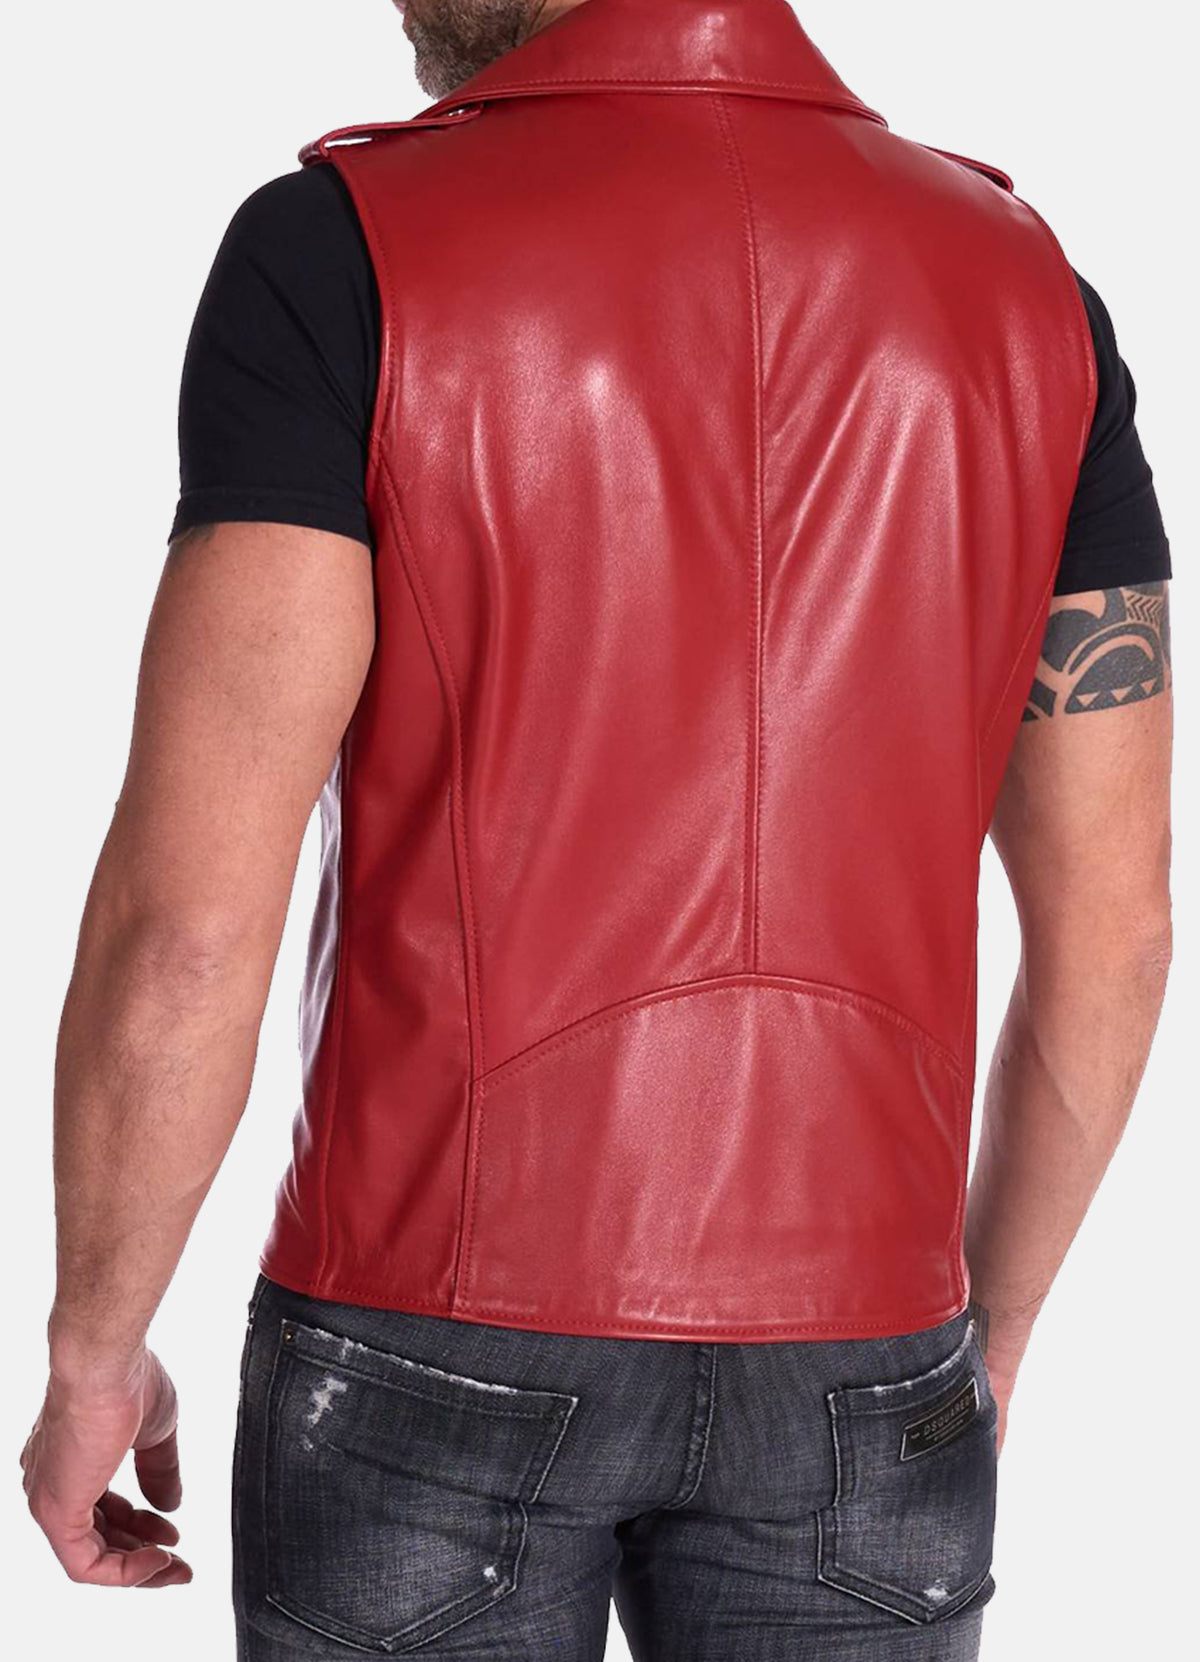 Mens Red Motorcycle Leather Vest | Elite Jacket